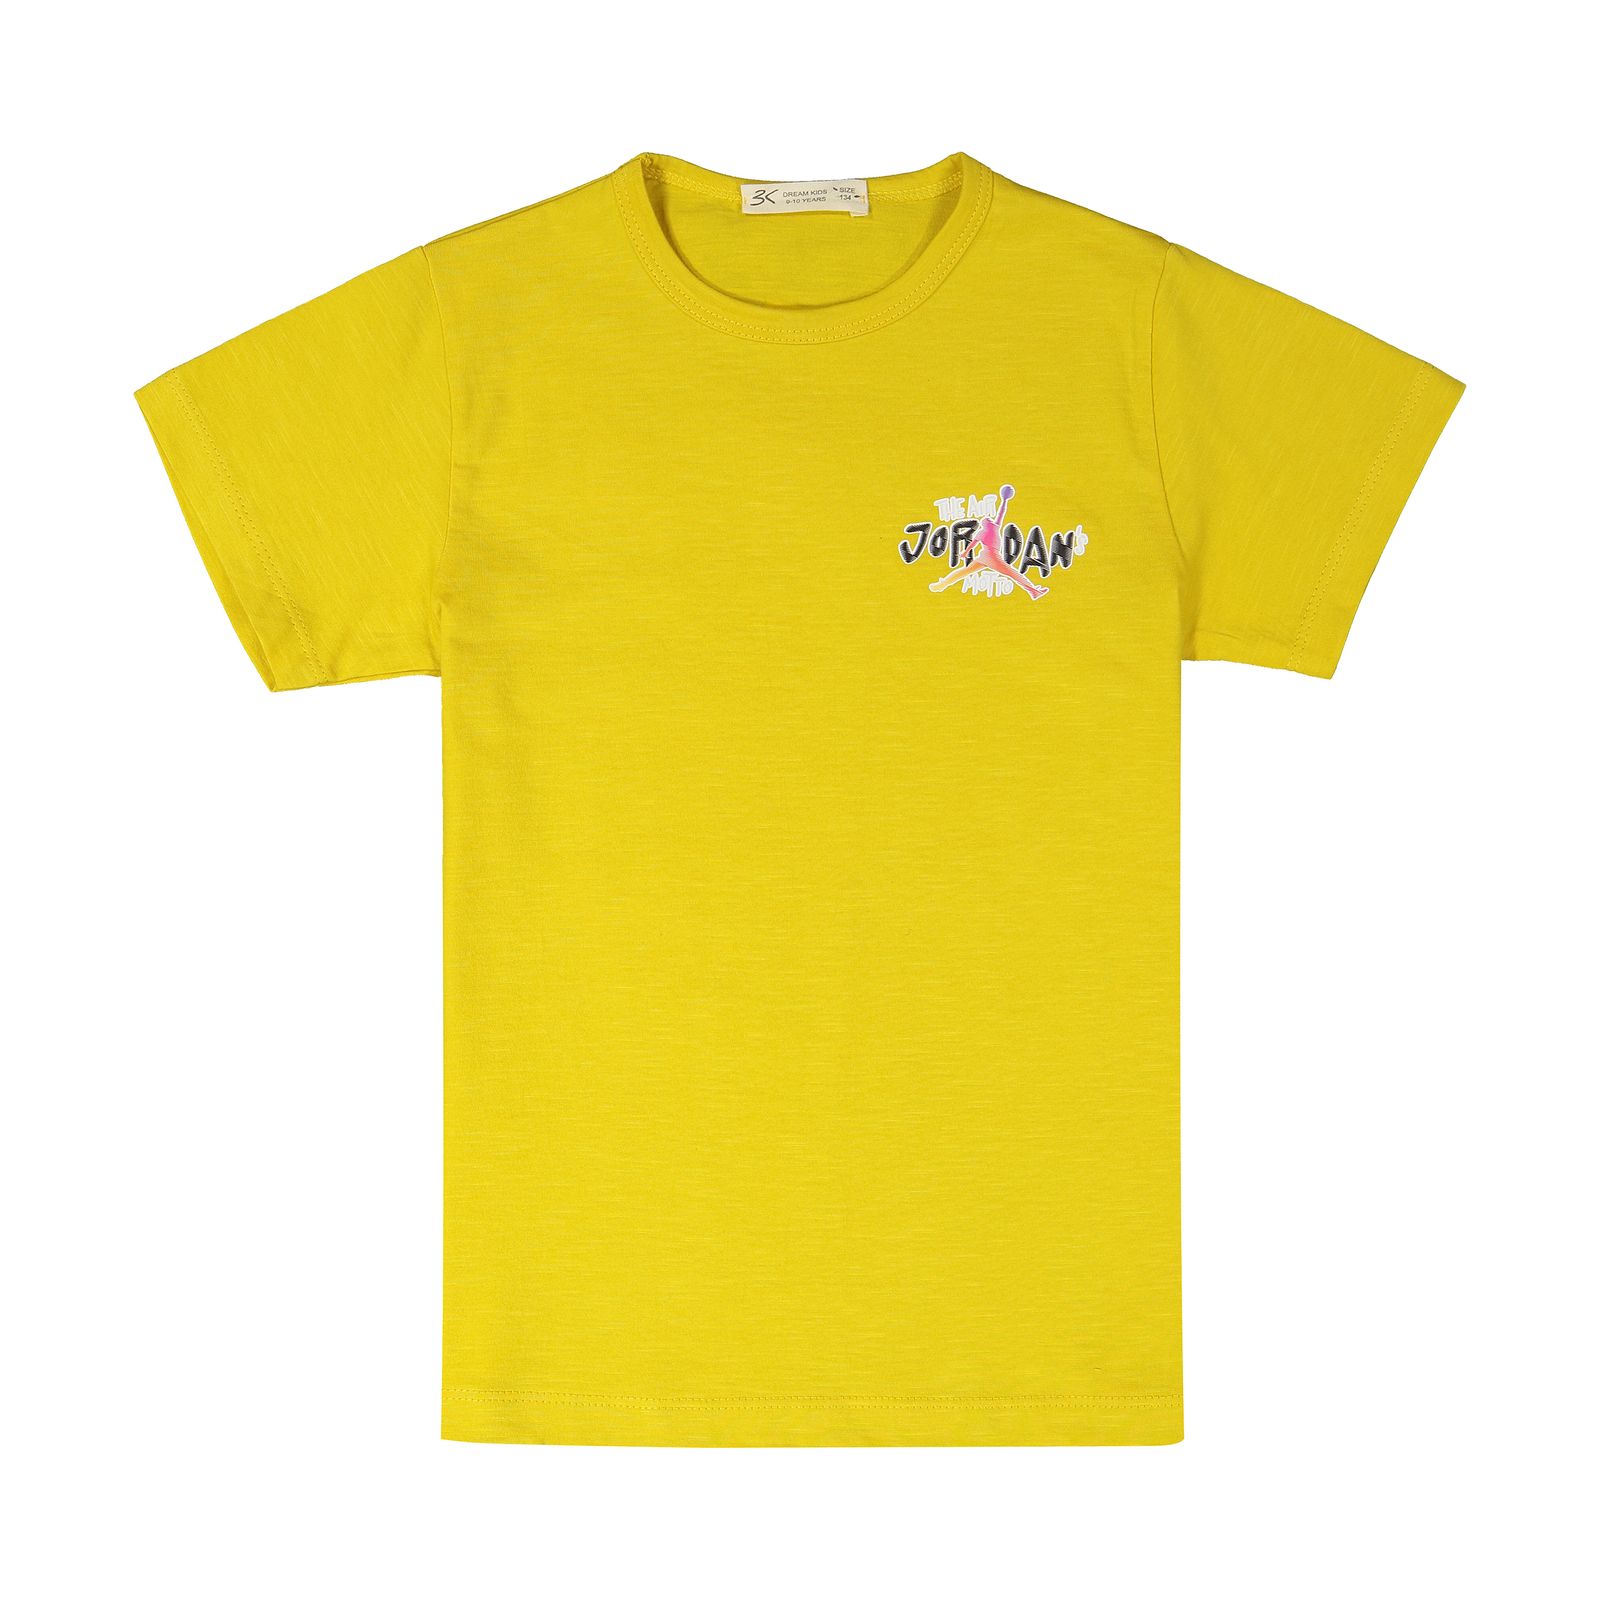 تی شرت پسرانه بی کی مدل 2211120-16 -  - 1